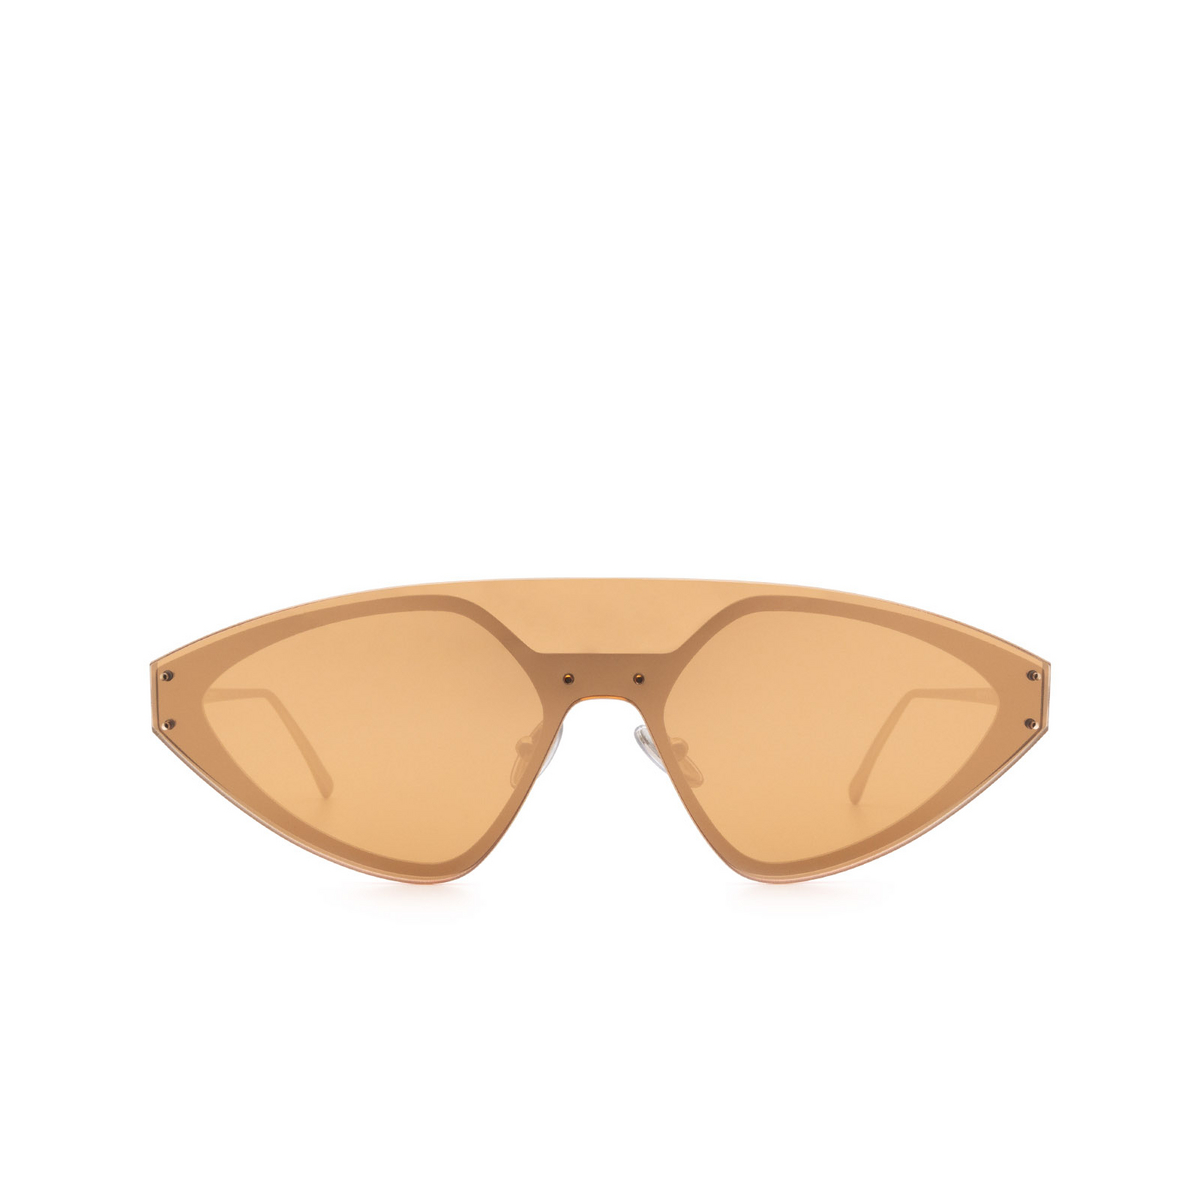 Sportmax® Irregular Sunglasses: SM0002 color Palladium 17G - front view.